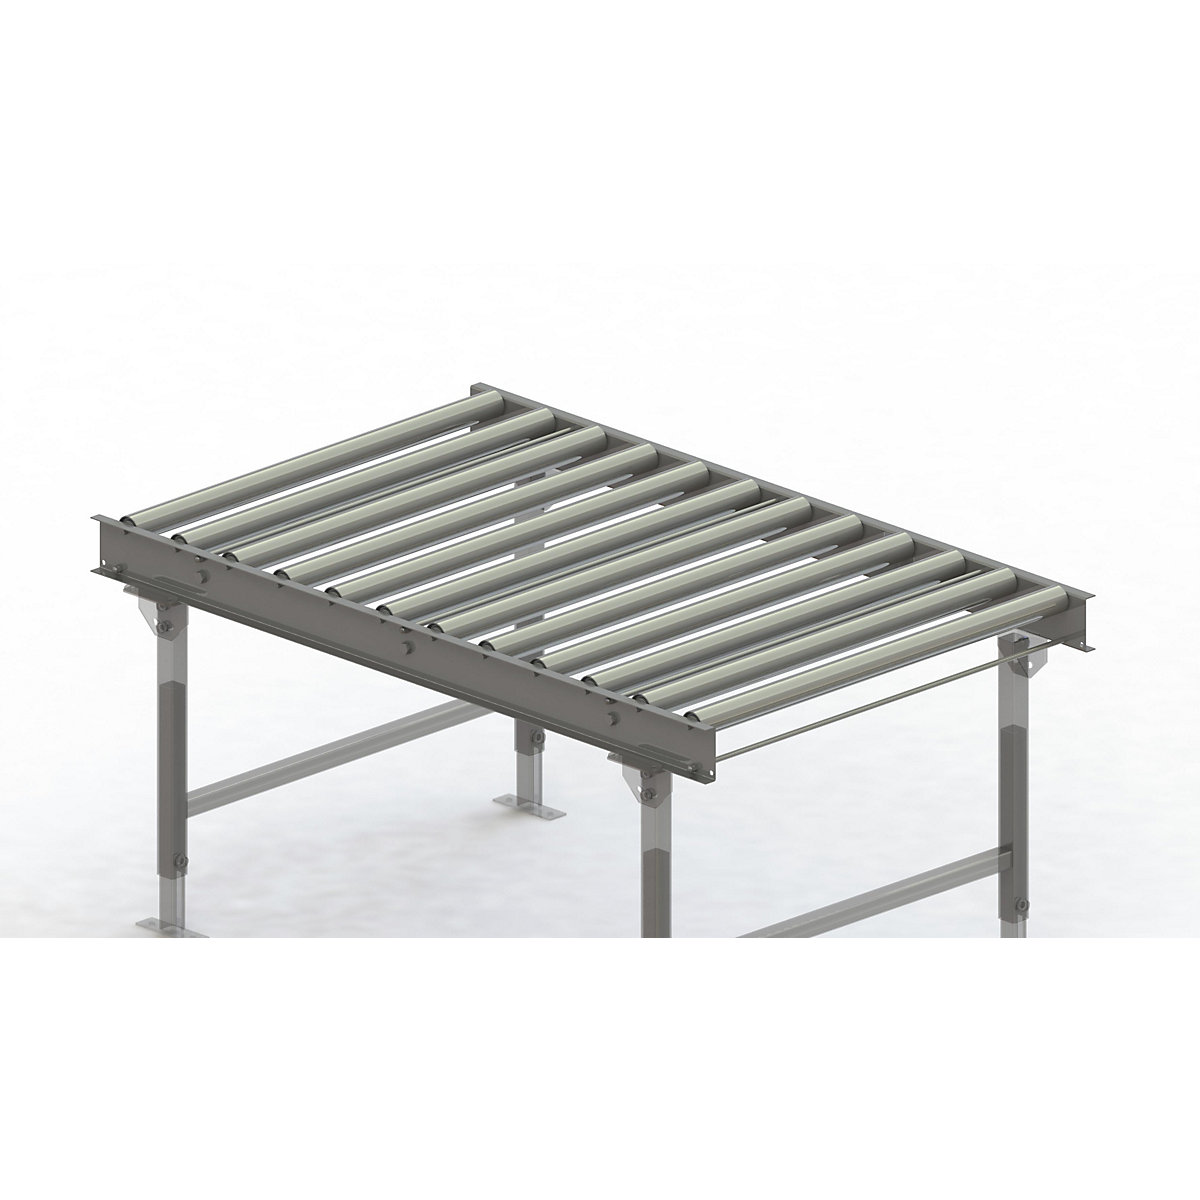 Gura – Roller conveyor, steel frame with zinc plated steel rollers, track width 900 mm, distance between axles 125 mm, length 1.5 m